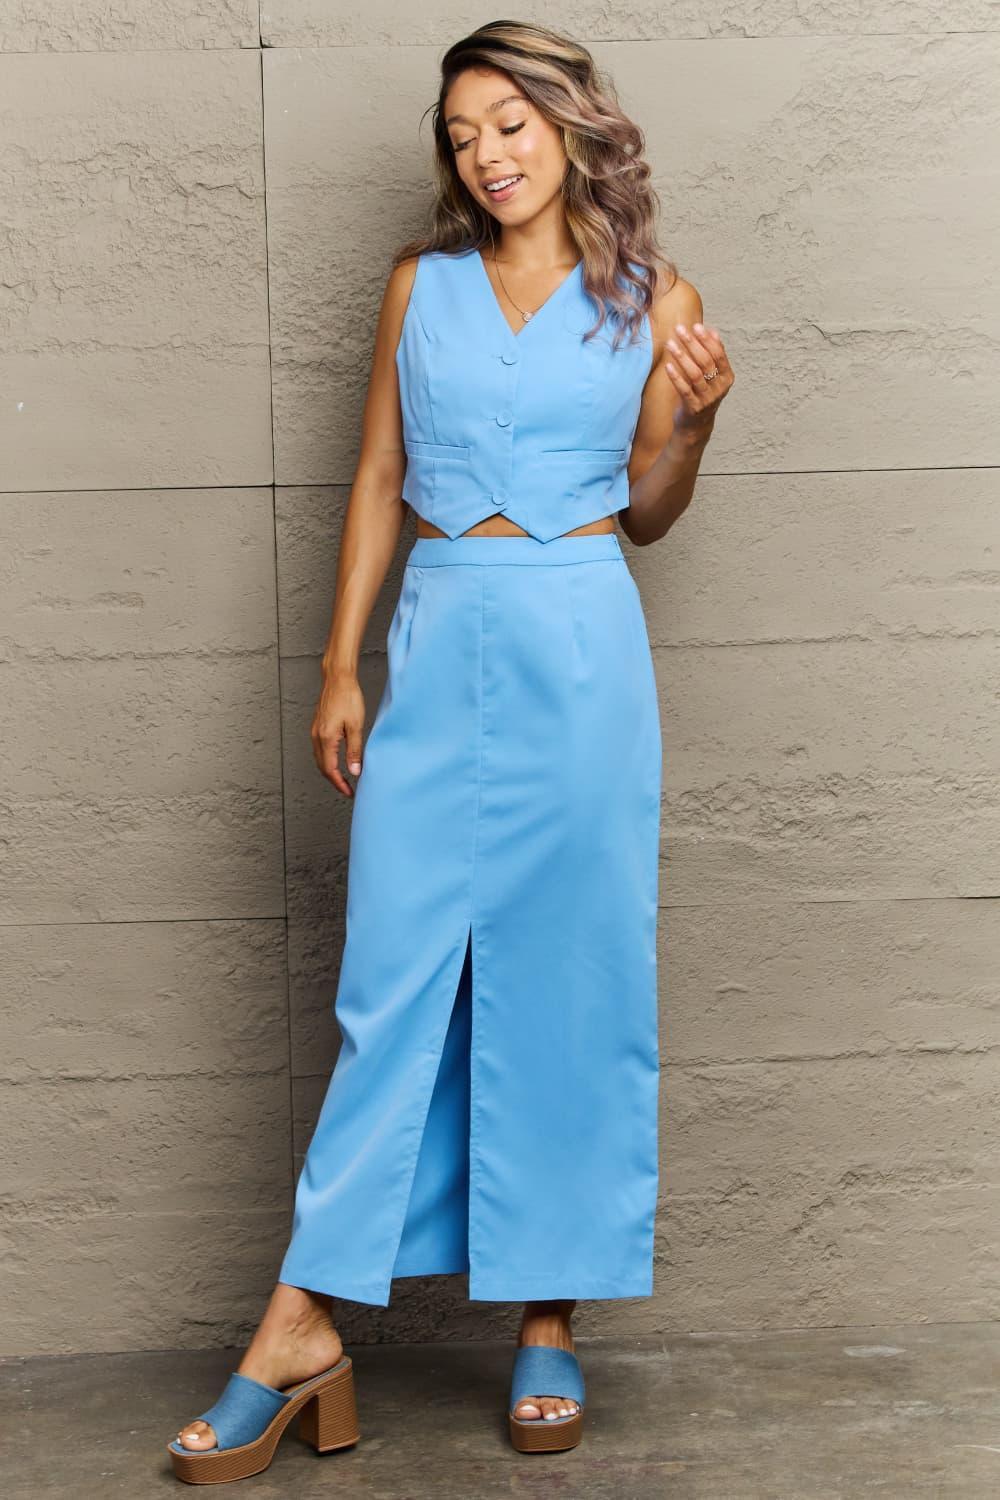 Pastel Blue Sleeveless Vest And Skirt Set - MXSTUDIO.COM